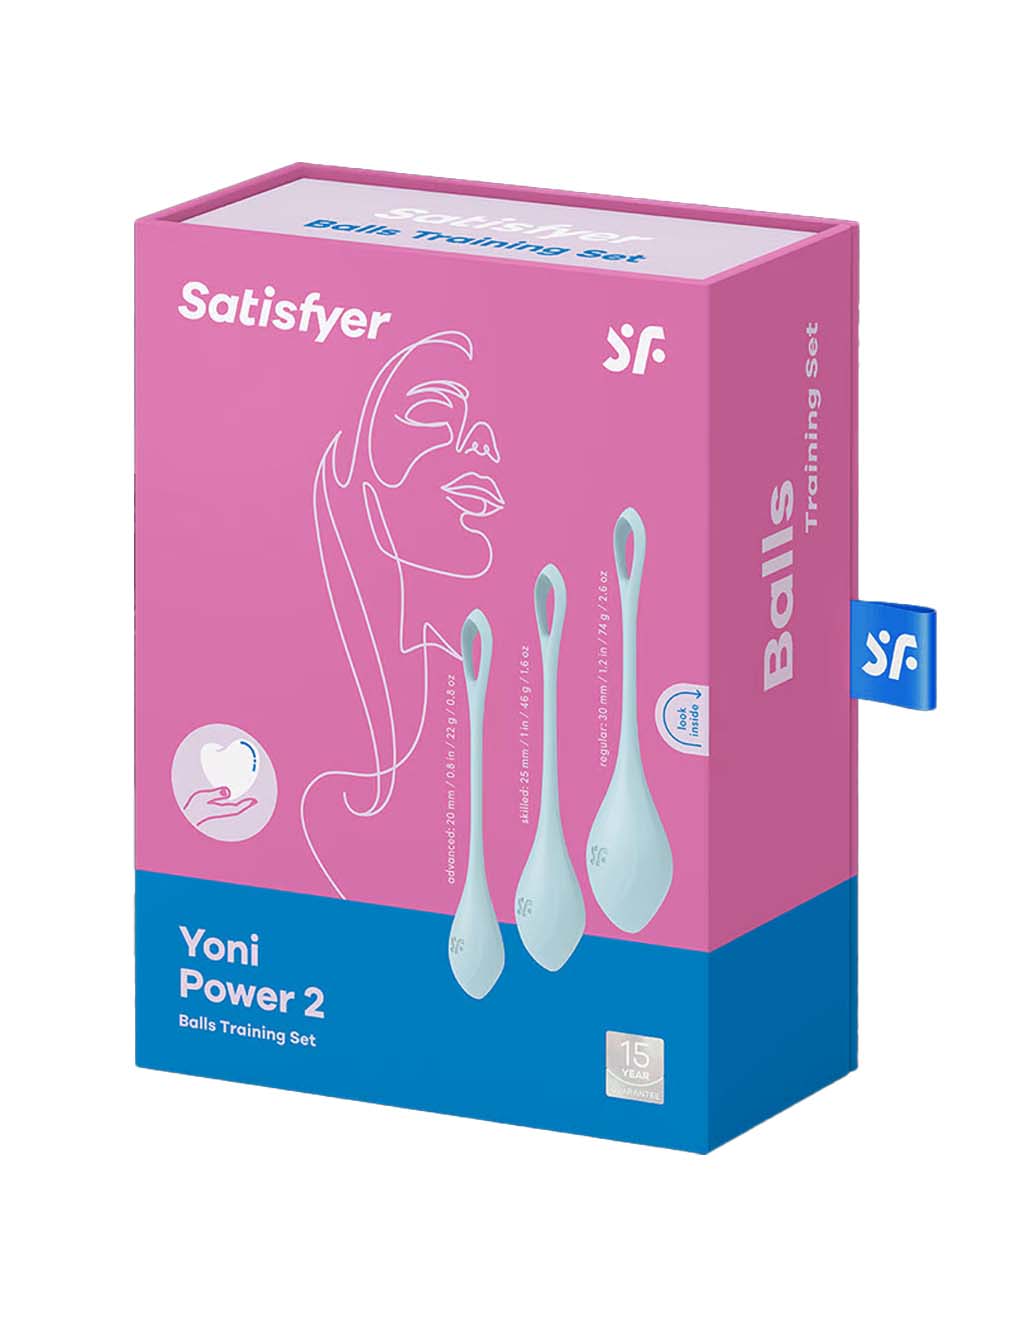 Satisfyer Beginner's Yoni Power 2- Blue Box